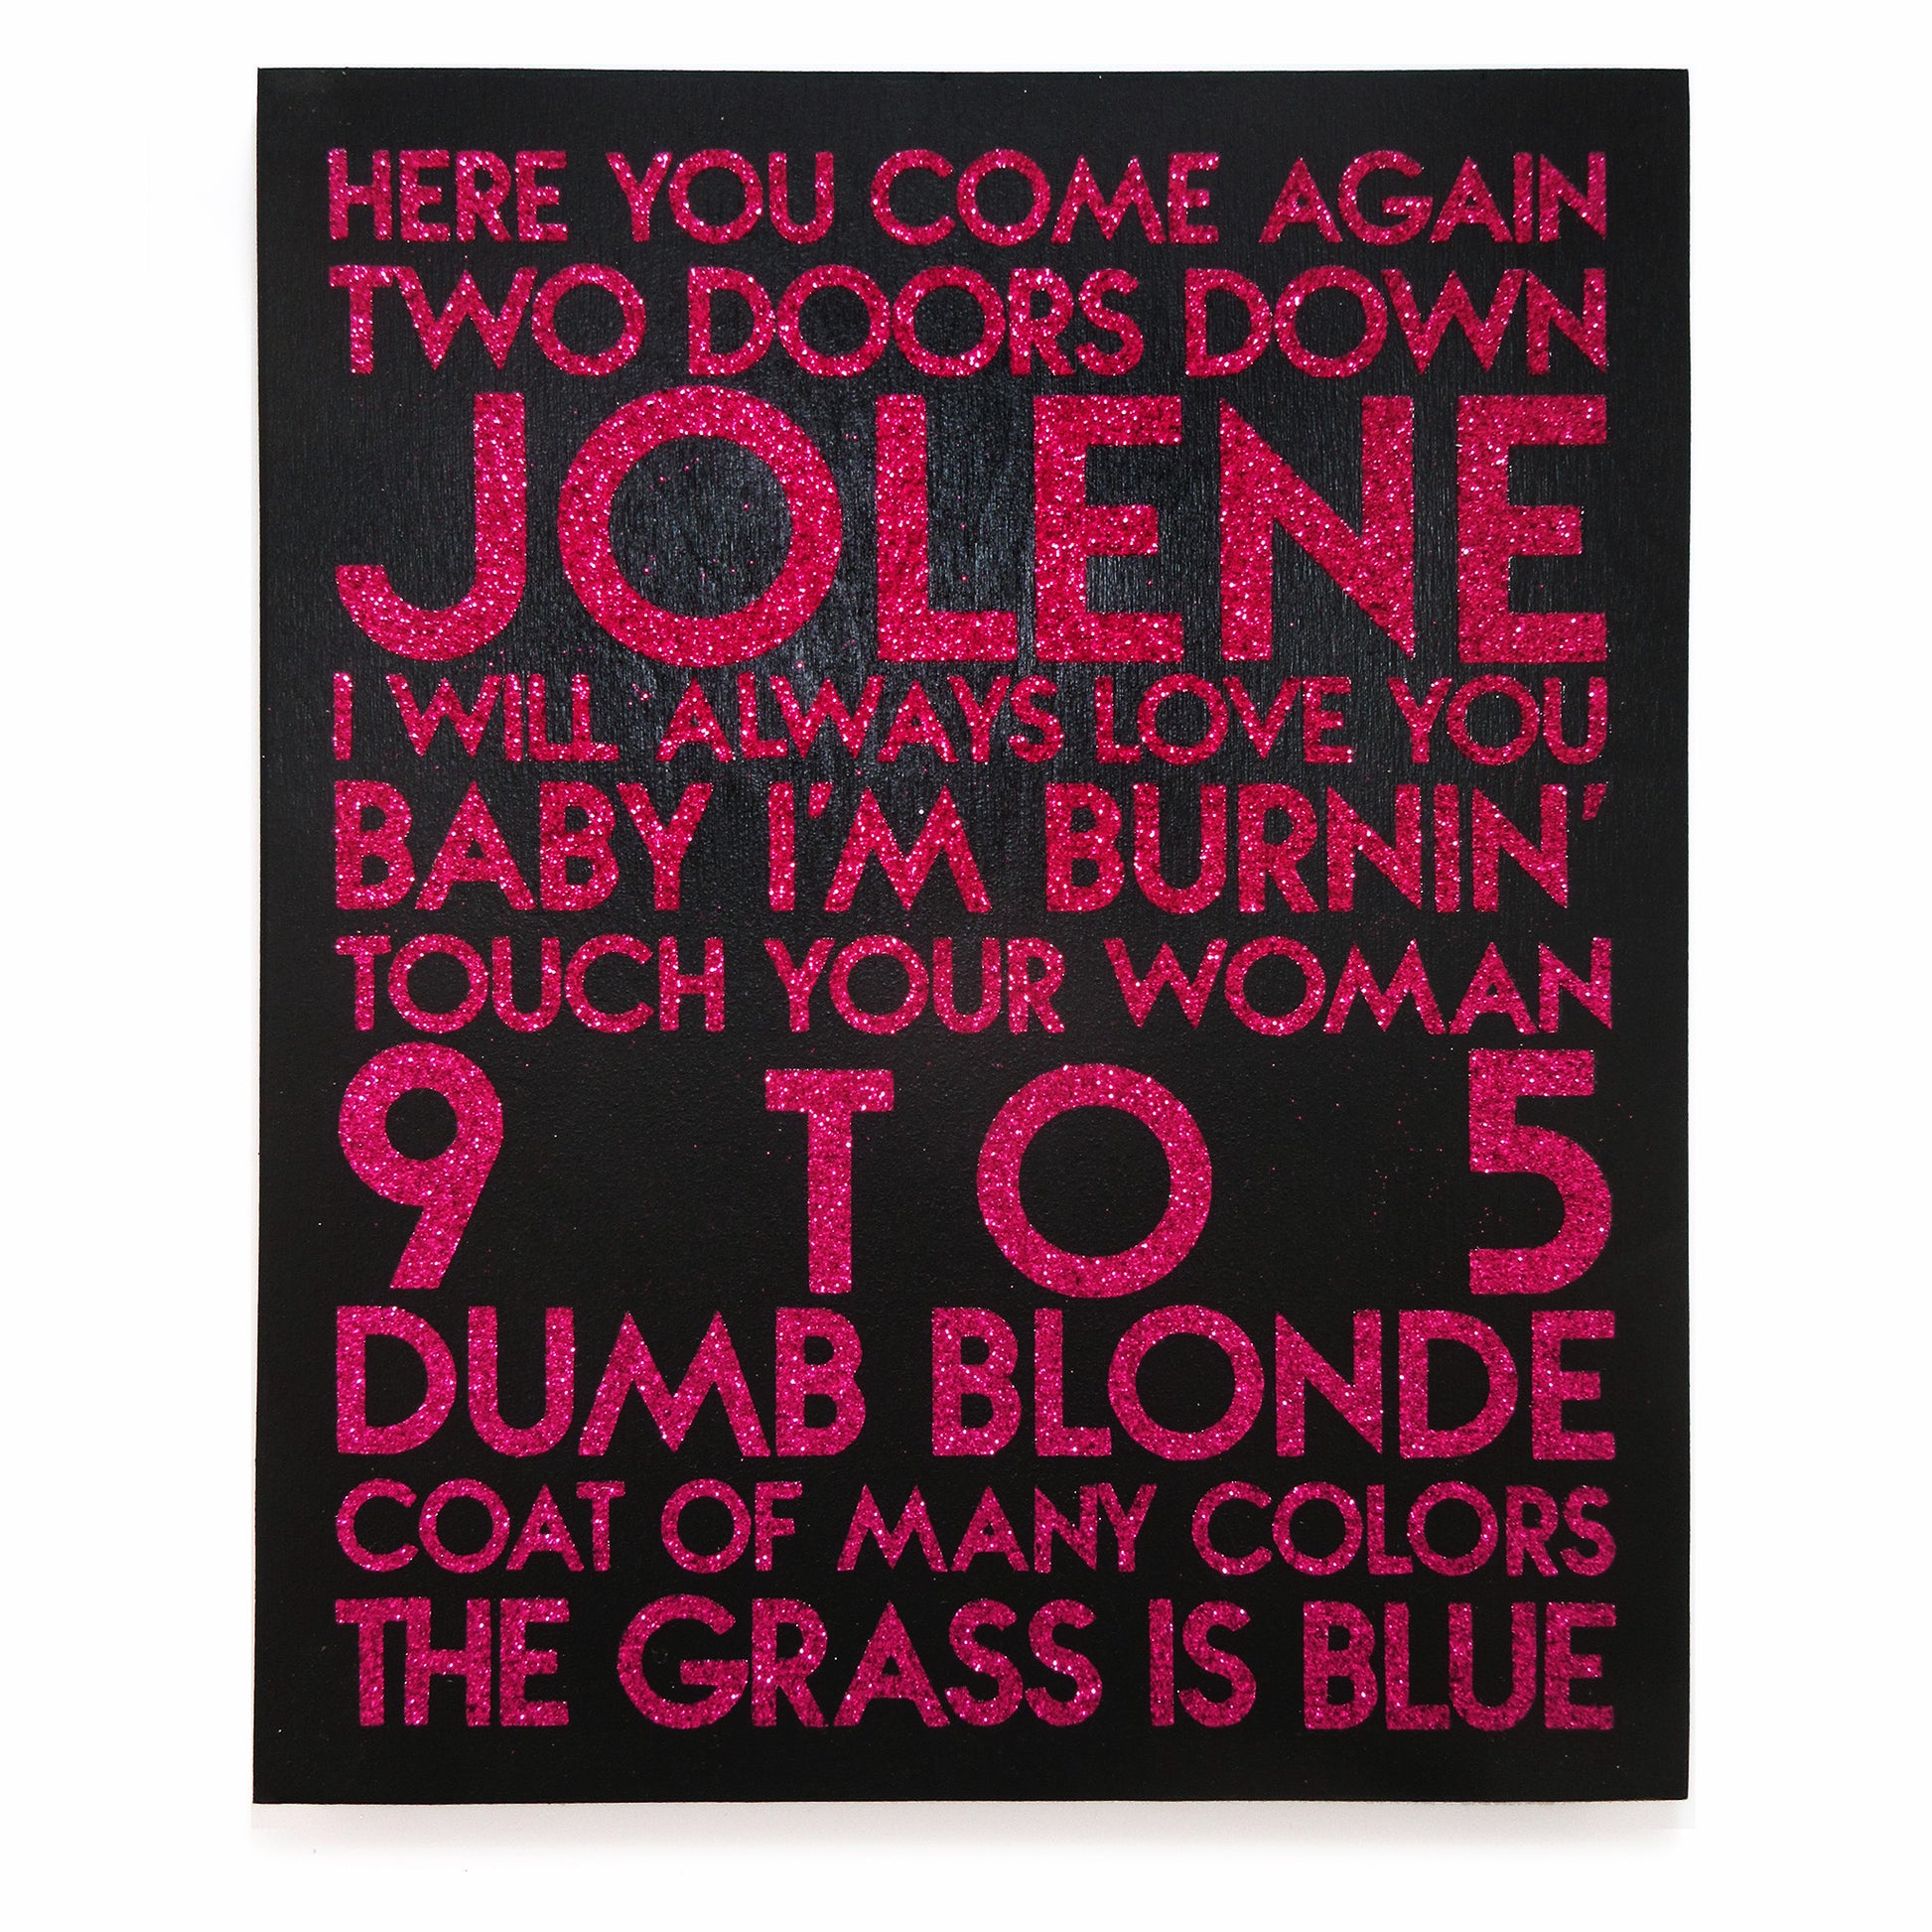 Custom sample - songs - hot pink glitter text on black wood art plaque - YourTen typography wall art by BBJ / Glitter Garage